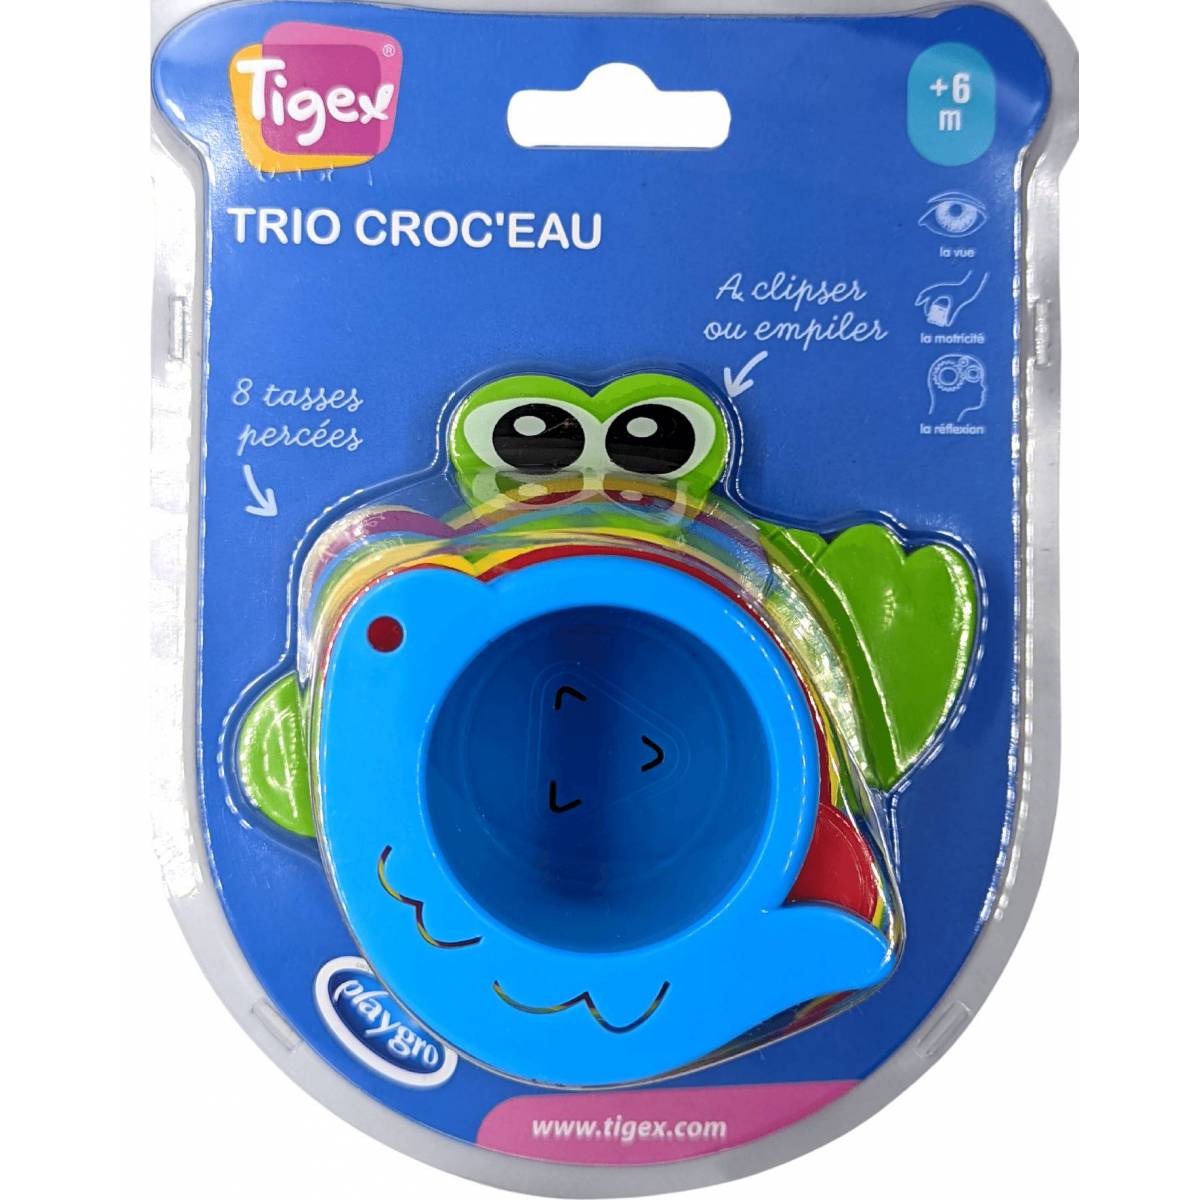 https://www.maxxidiscount.com/25362-large_default/jouet-de-bain-trio-croc-eau-tigex-6-mois.jpg